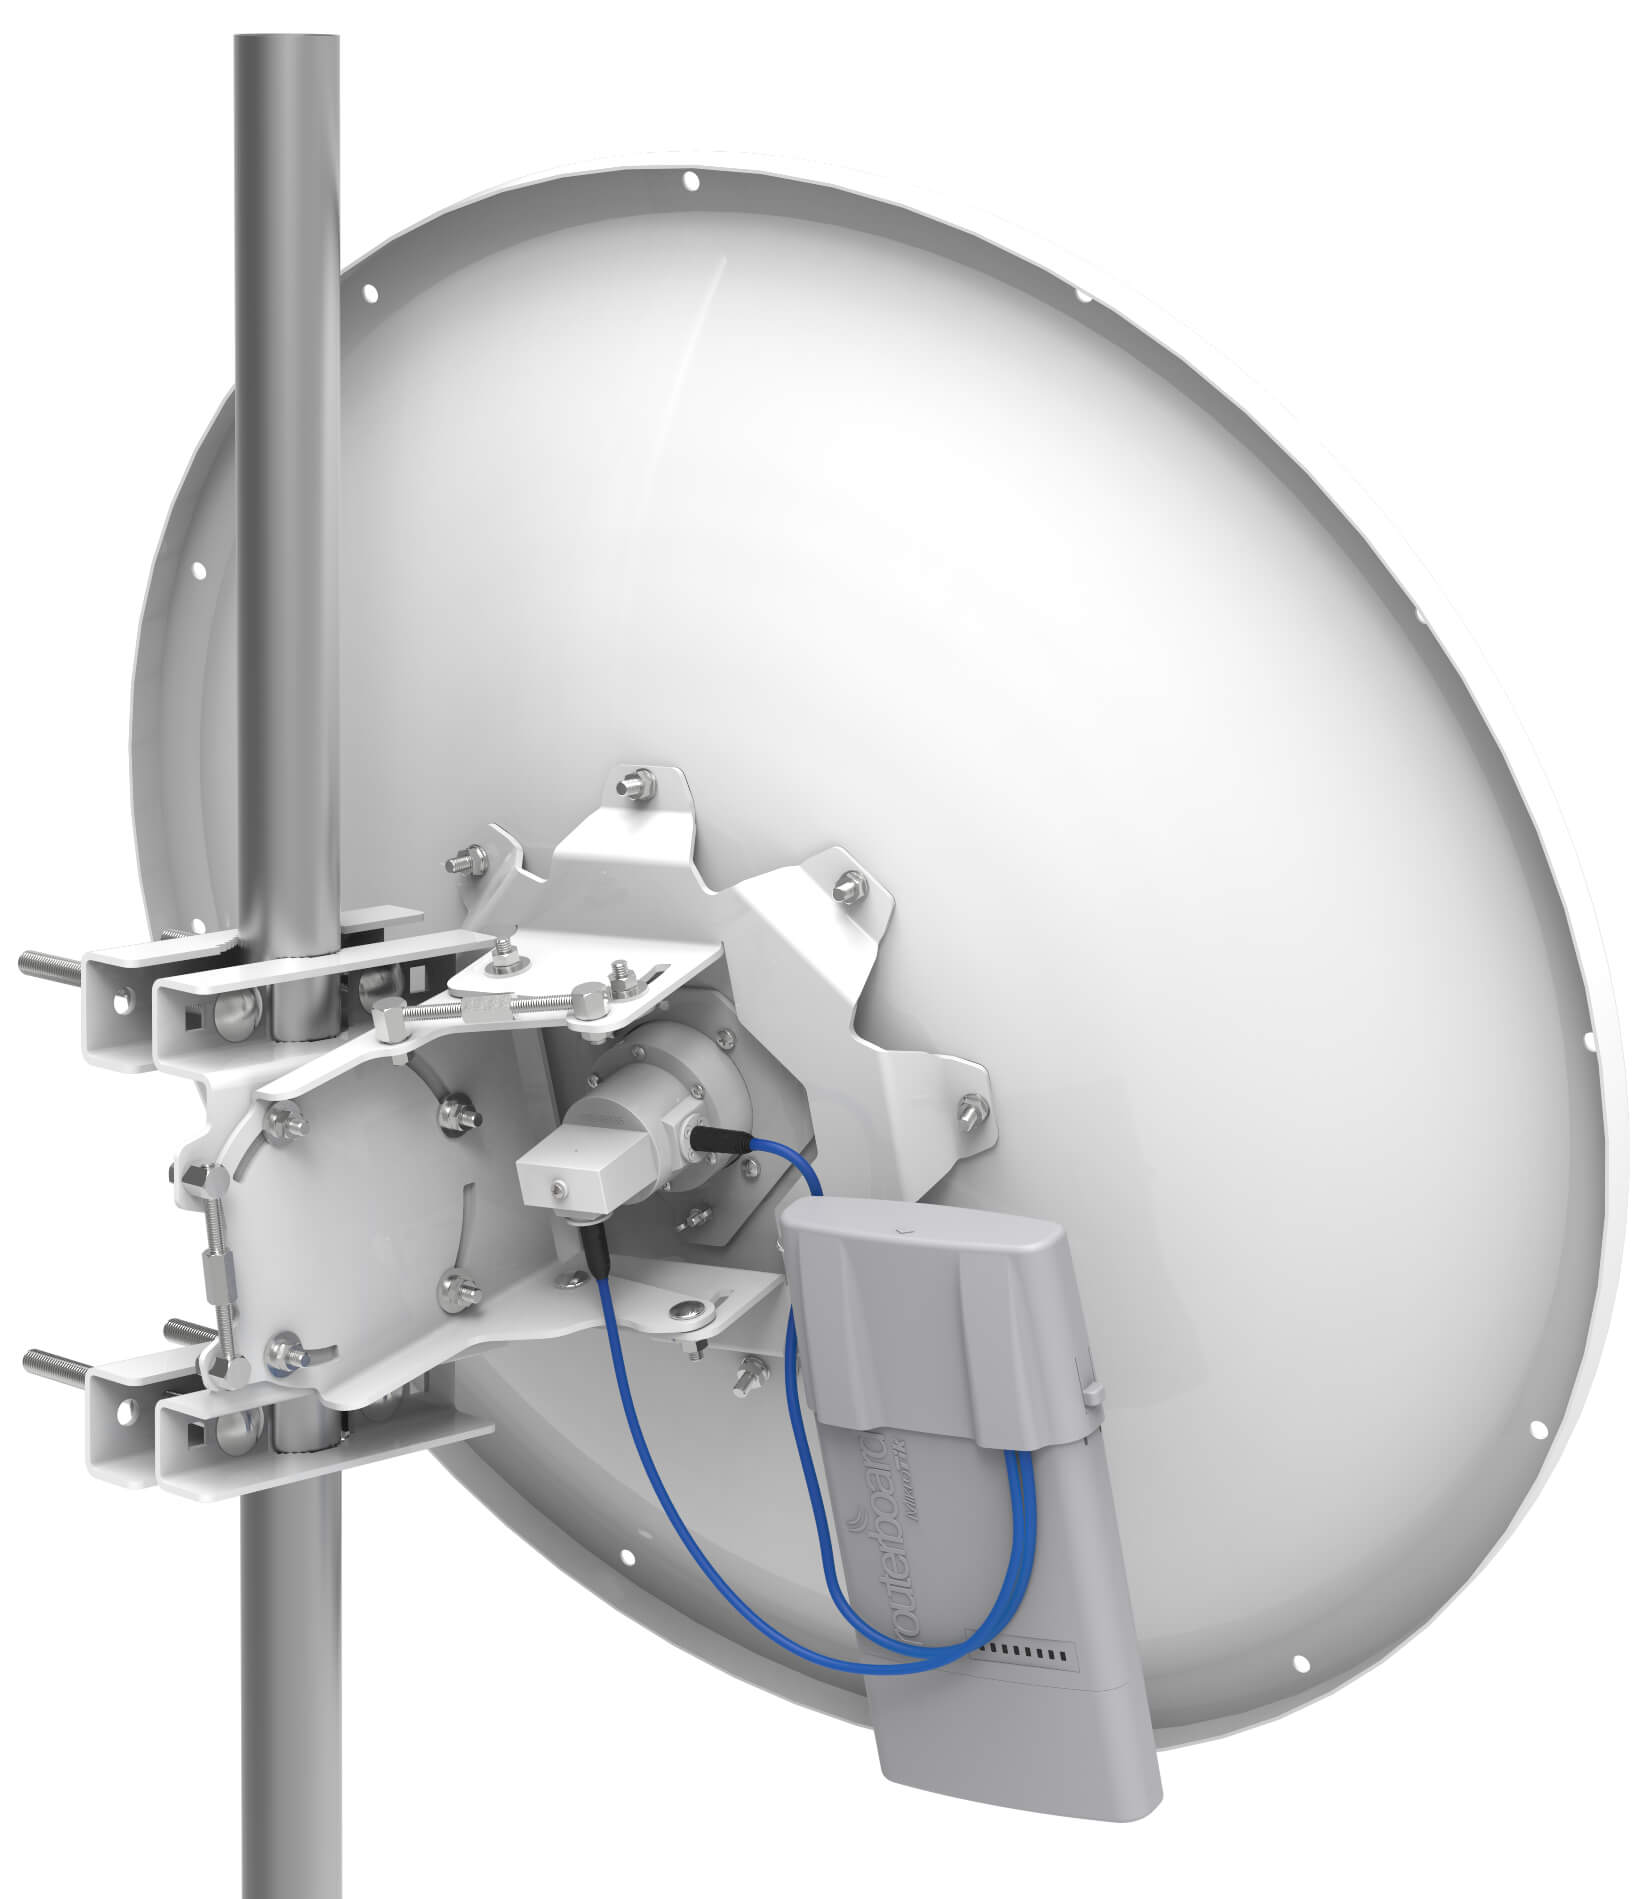   Antennes WiFi   MTAD-5G-30D3-PA 30dBi Dish antenna 5GHz 2x RPSMA